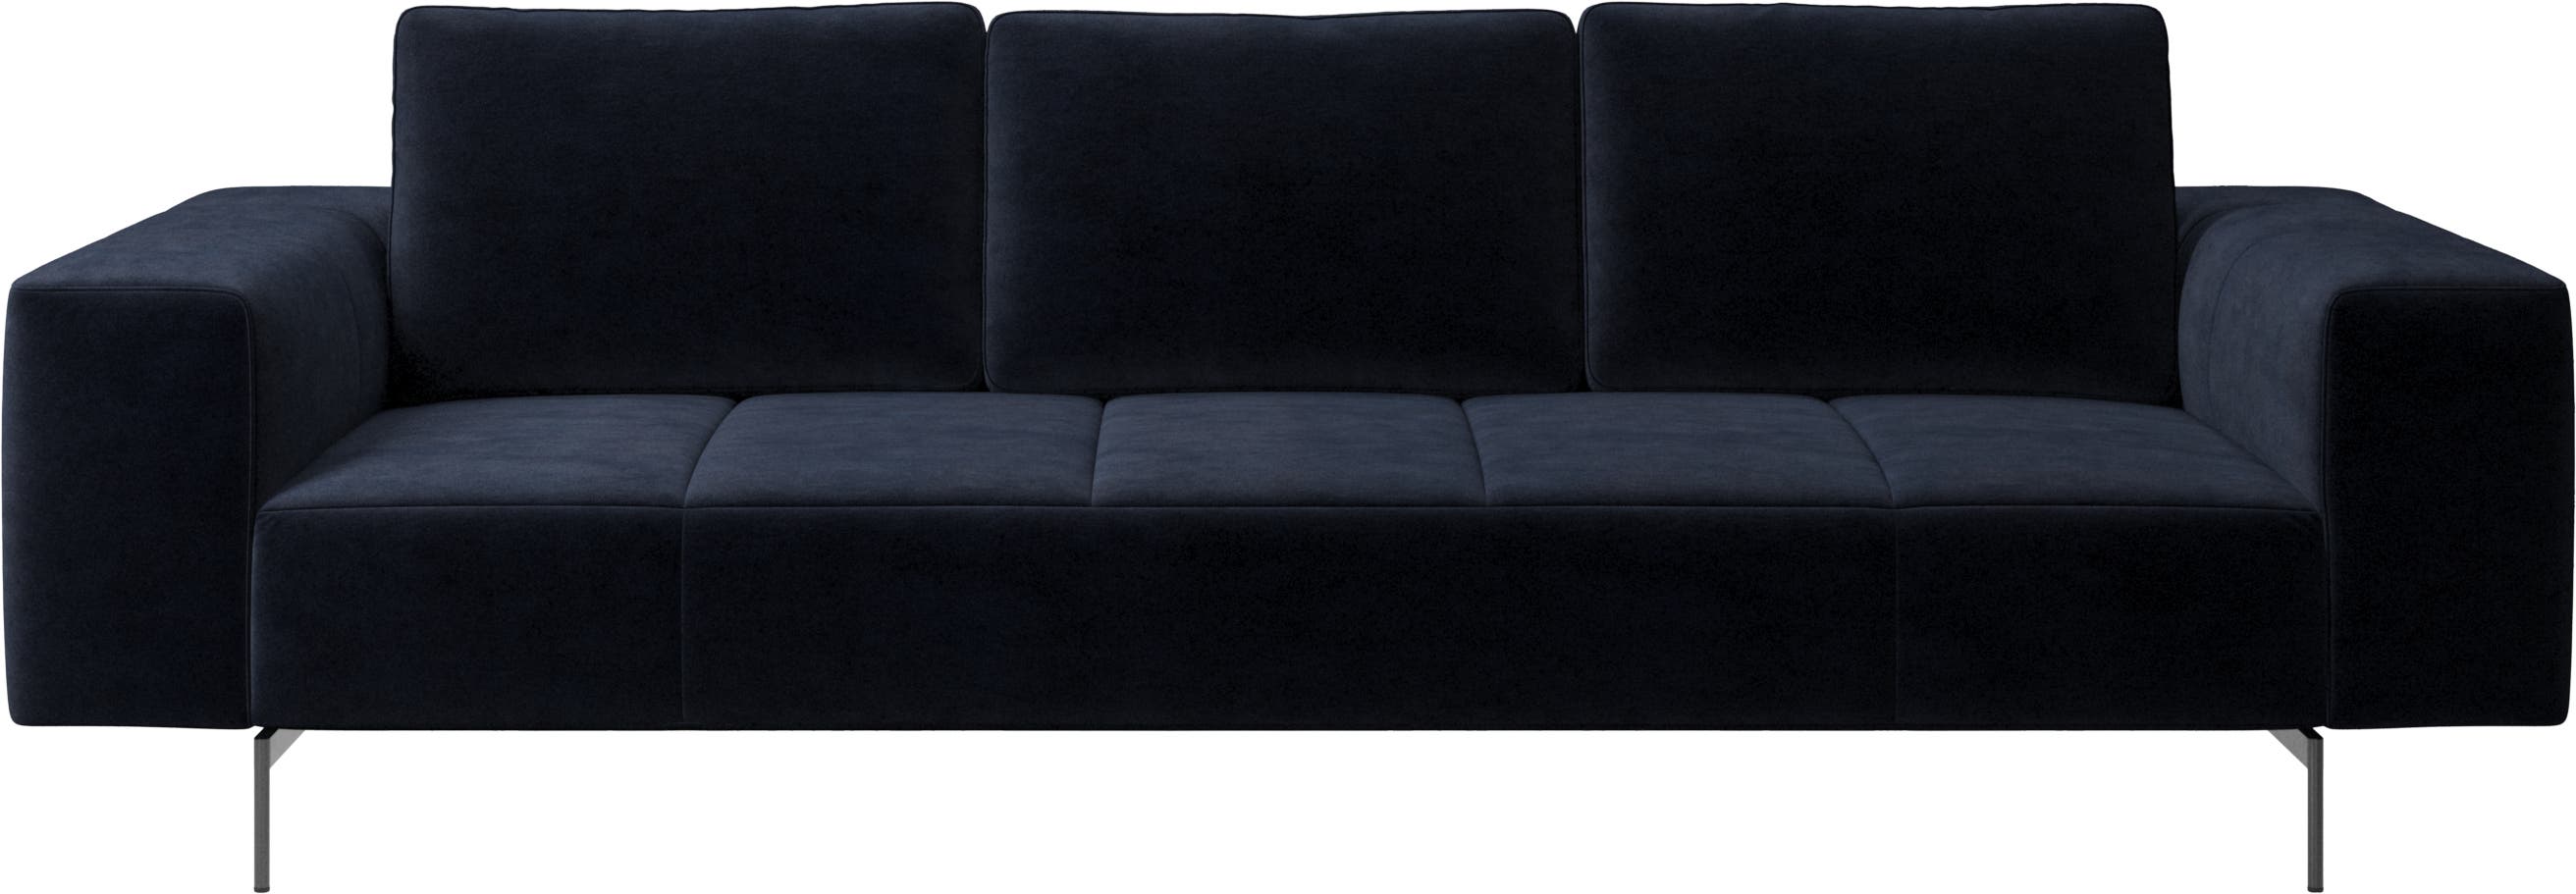 Amsterdam sofa